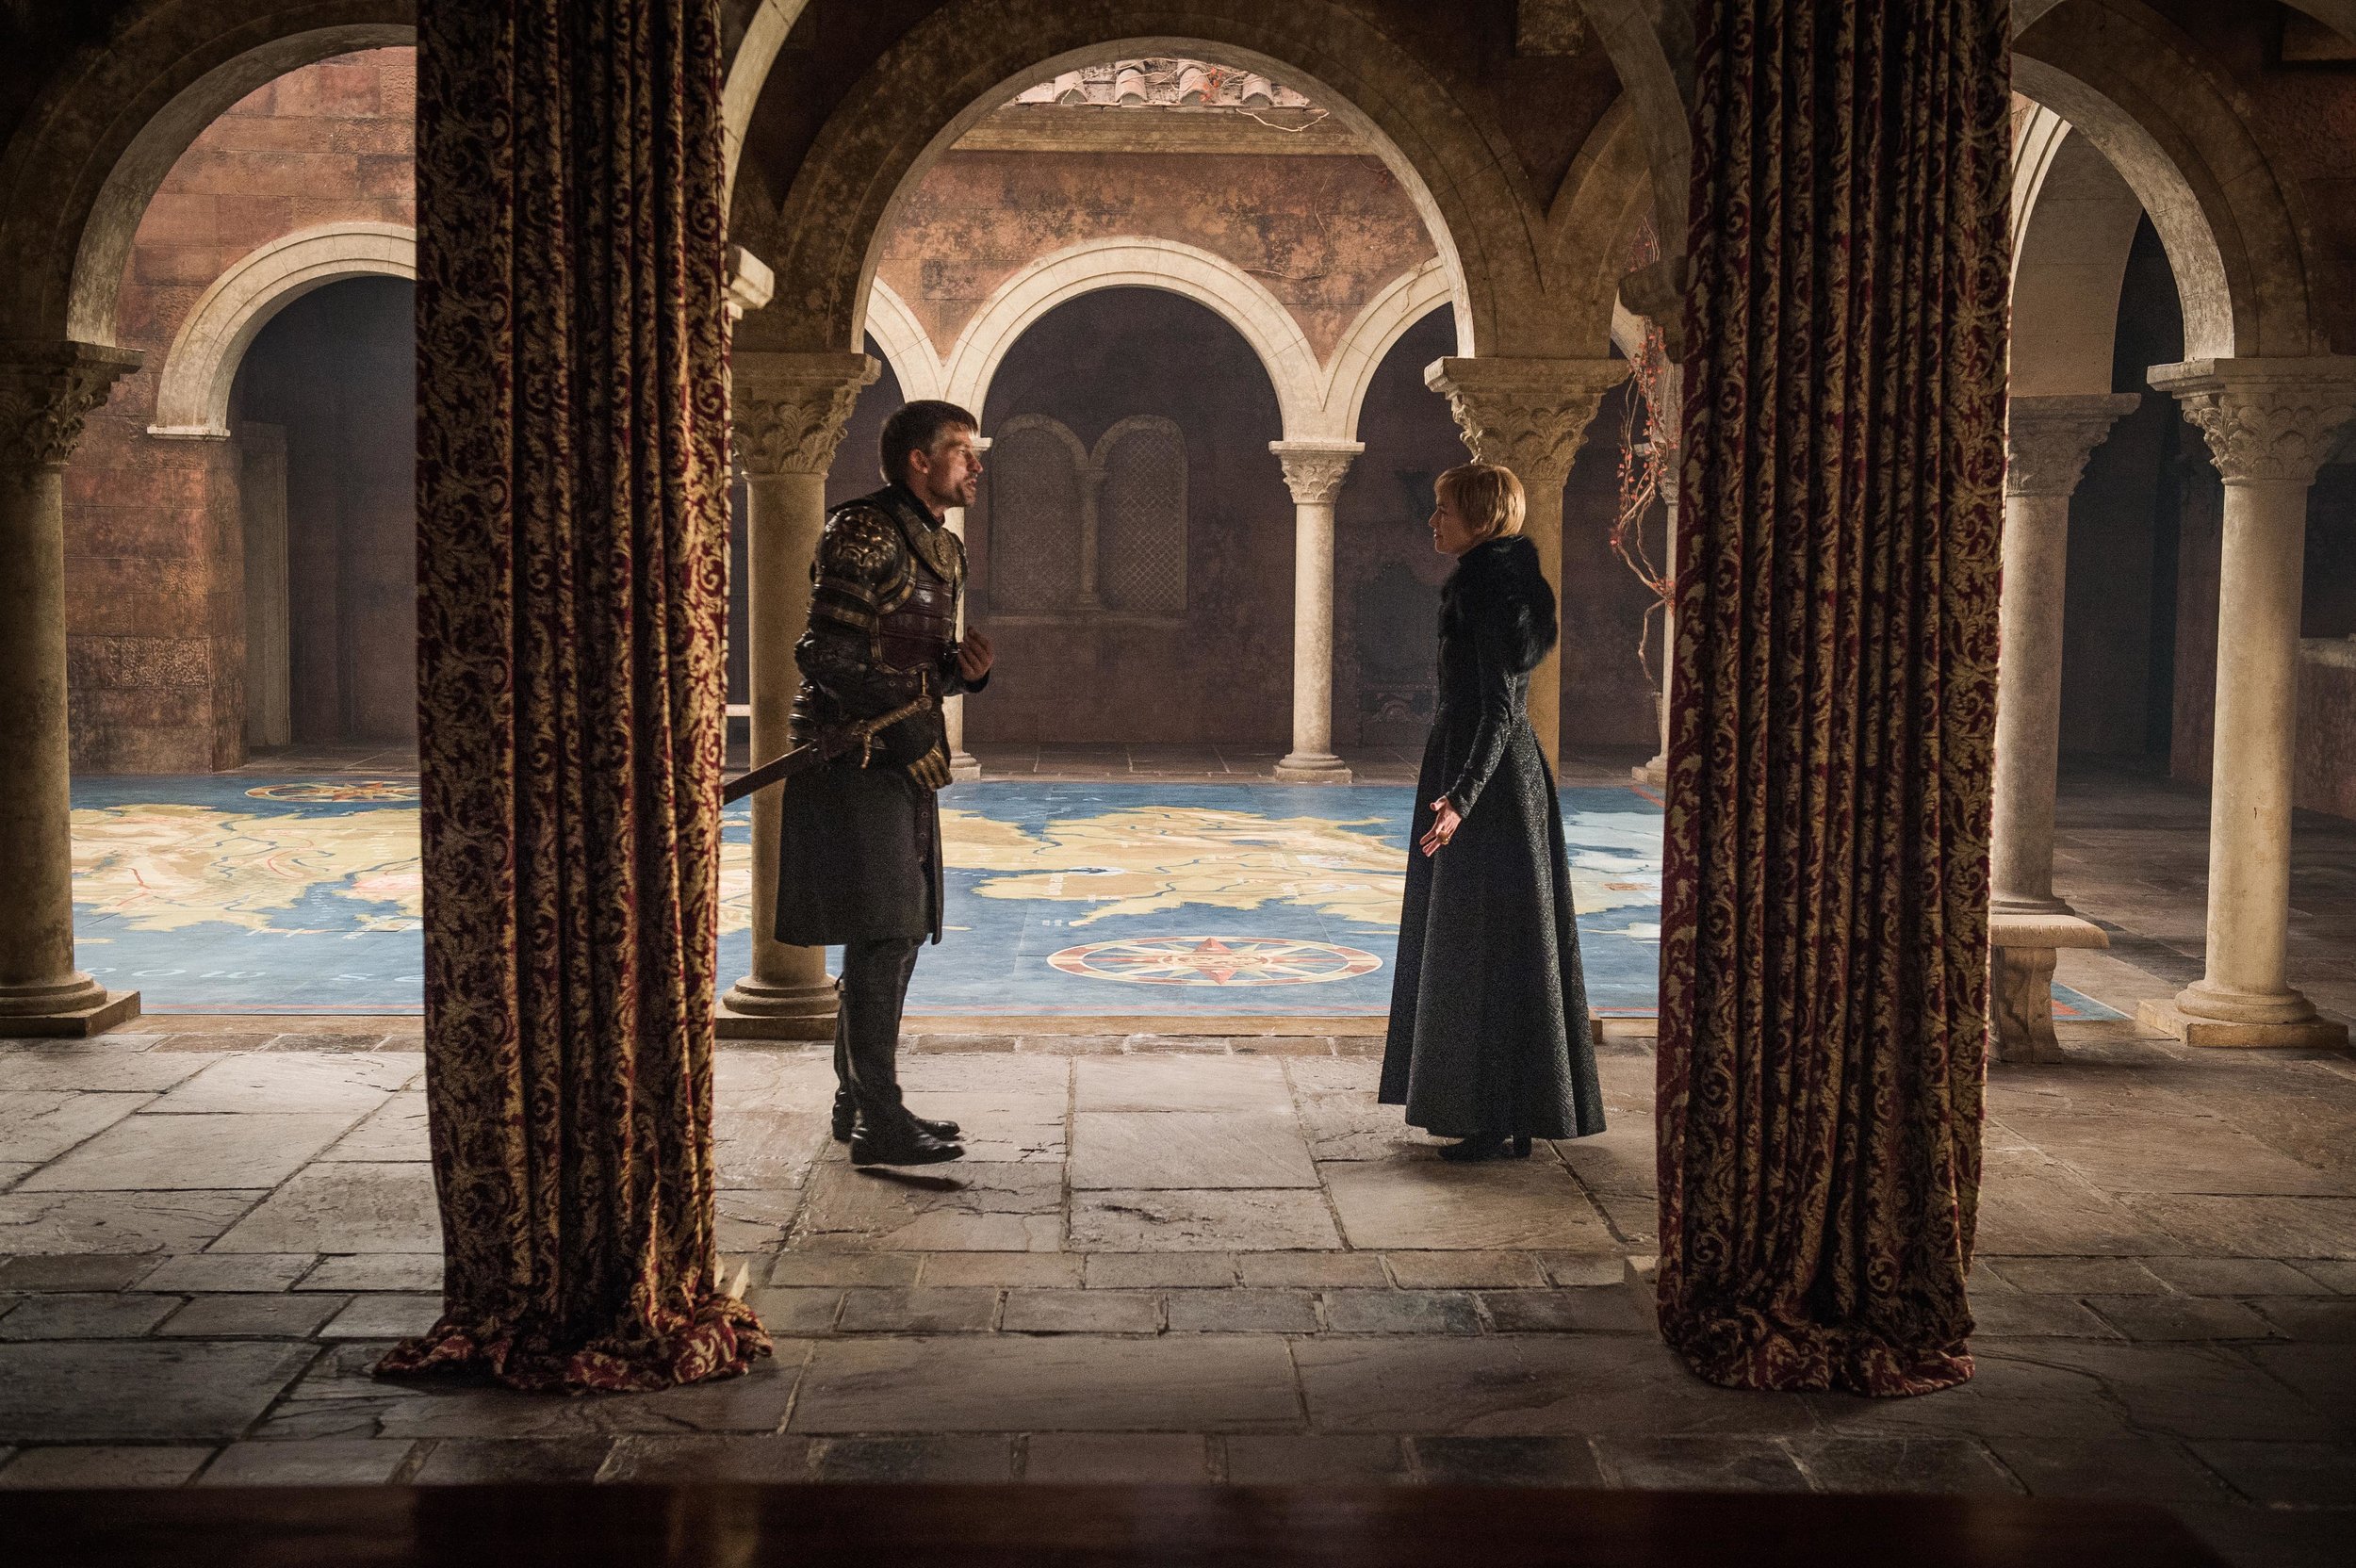   Jamie (Nikolaj Coster-Waldau) & Cersei Lannister (Lena Heady)  Image - HBO 